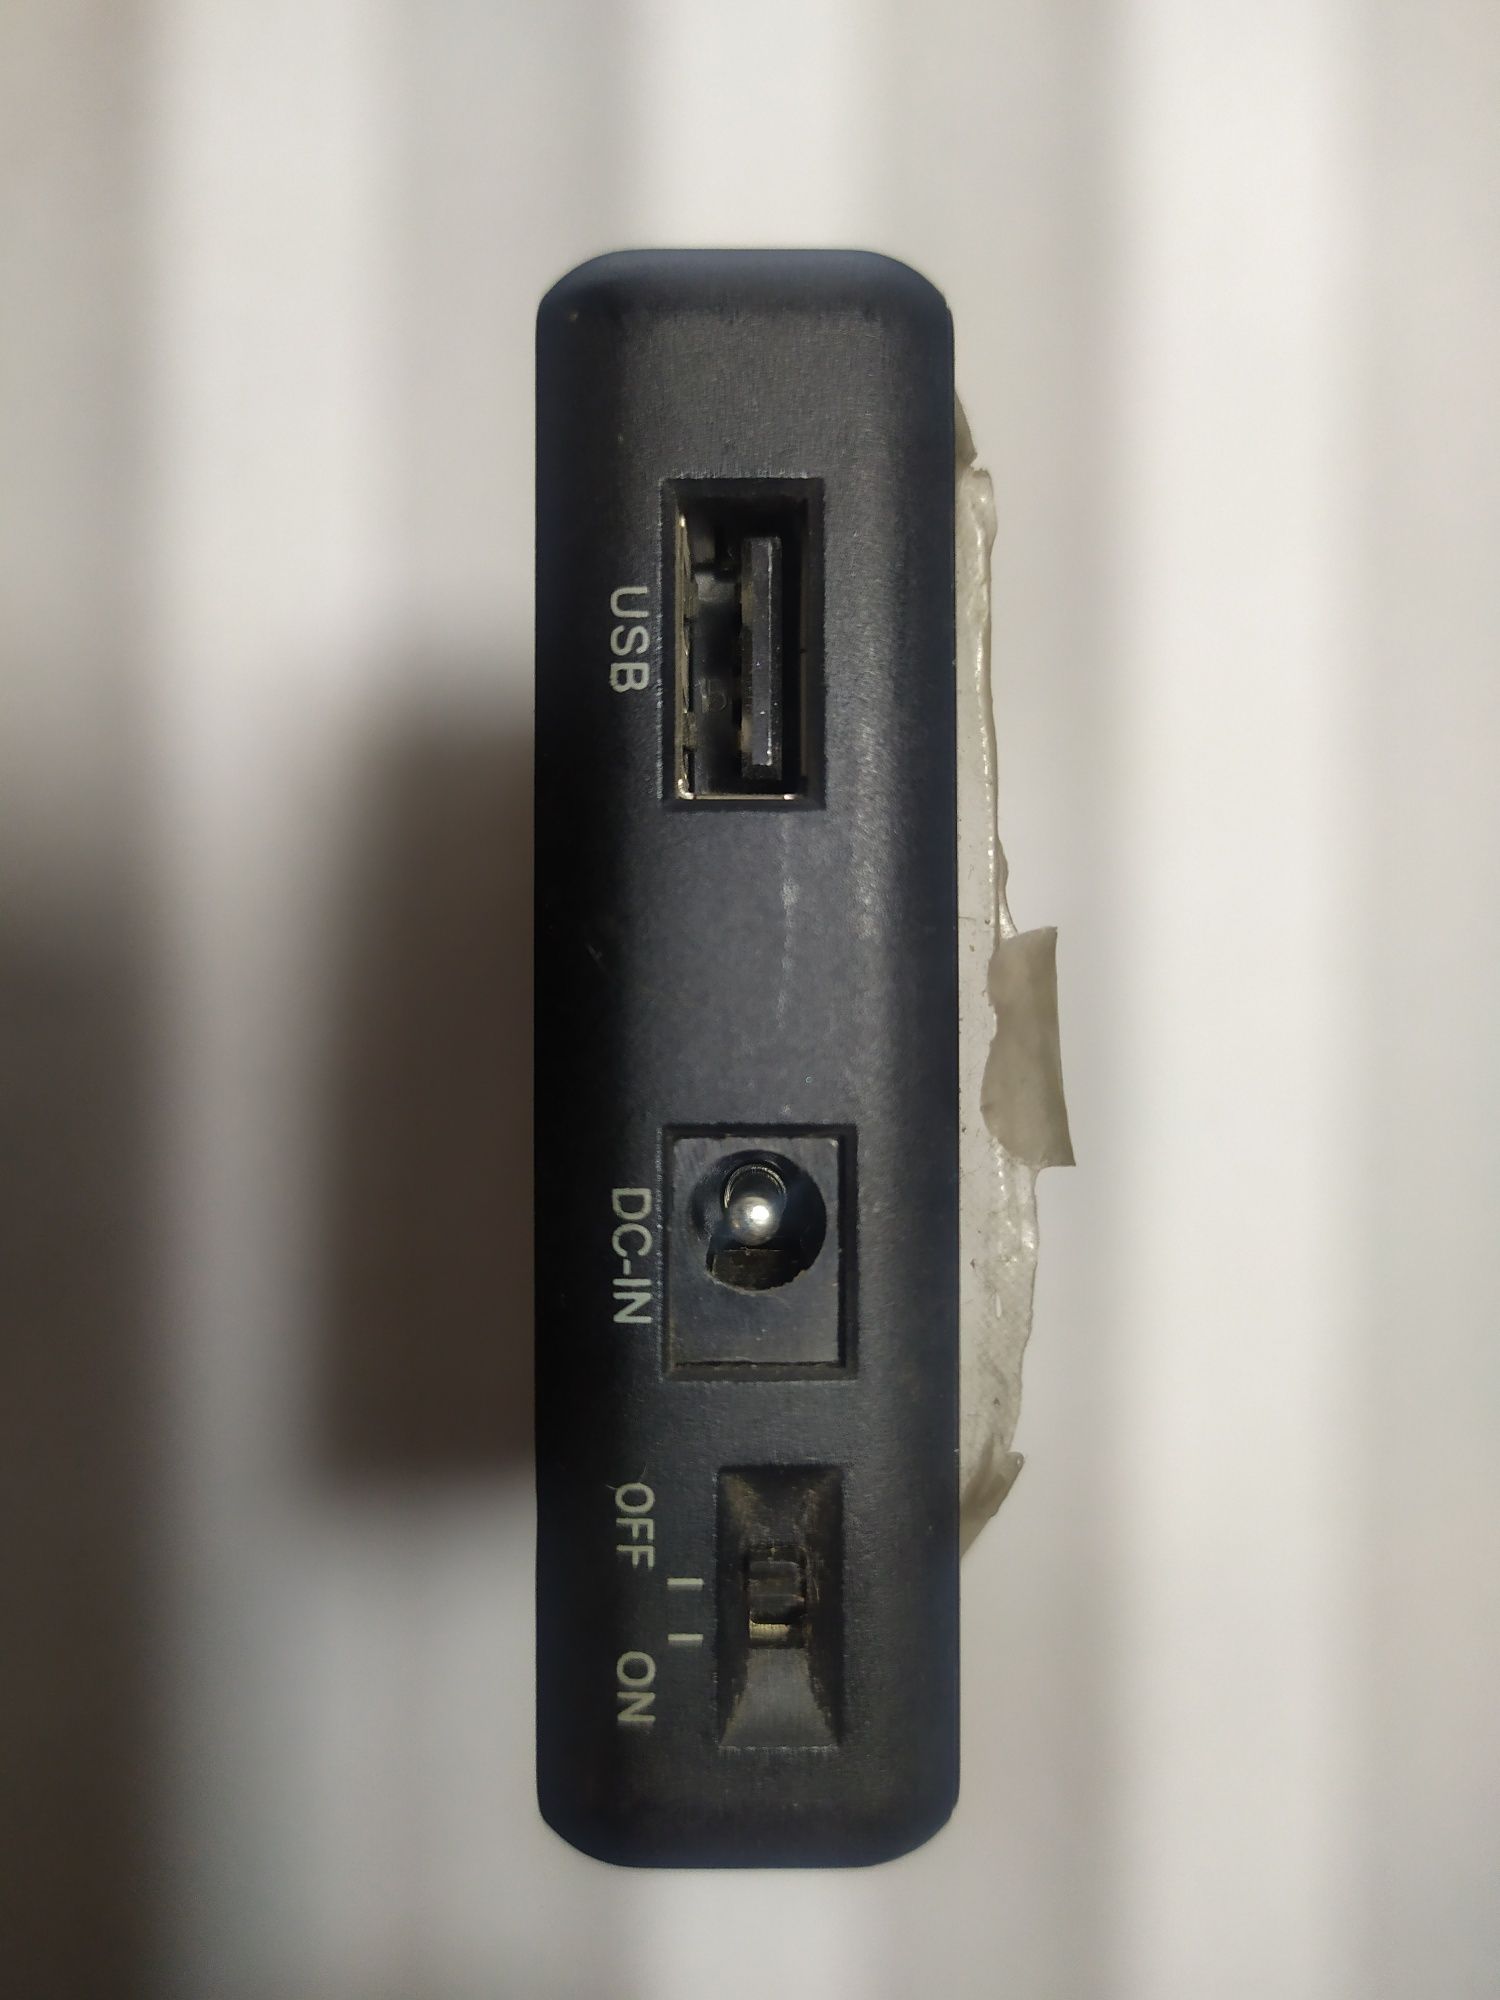 WI-FI роутер Sprint под USB модем